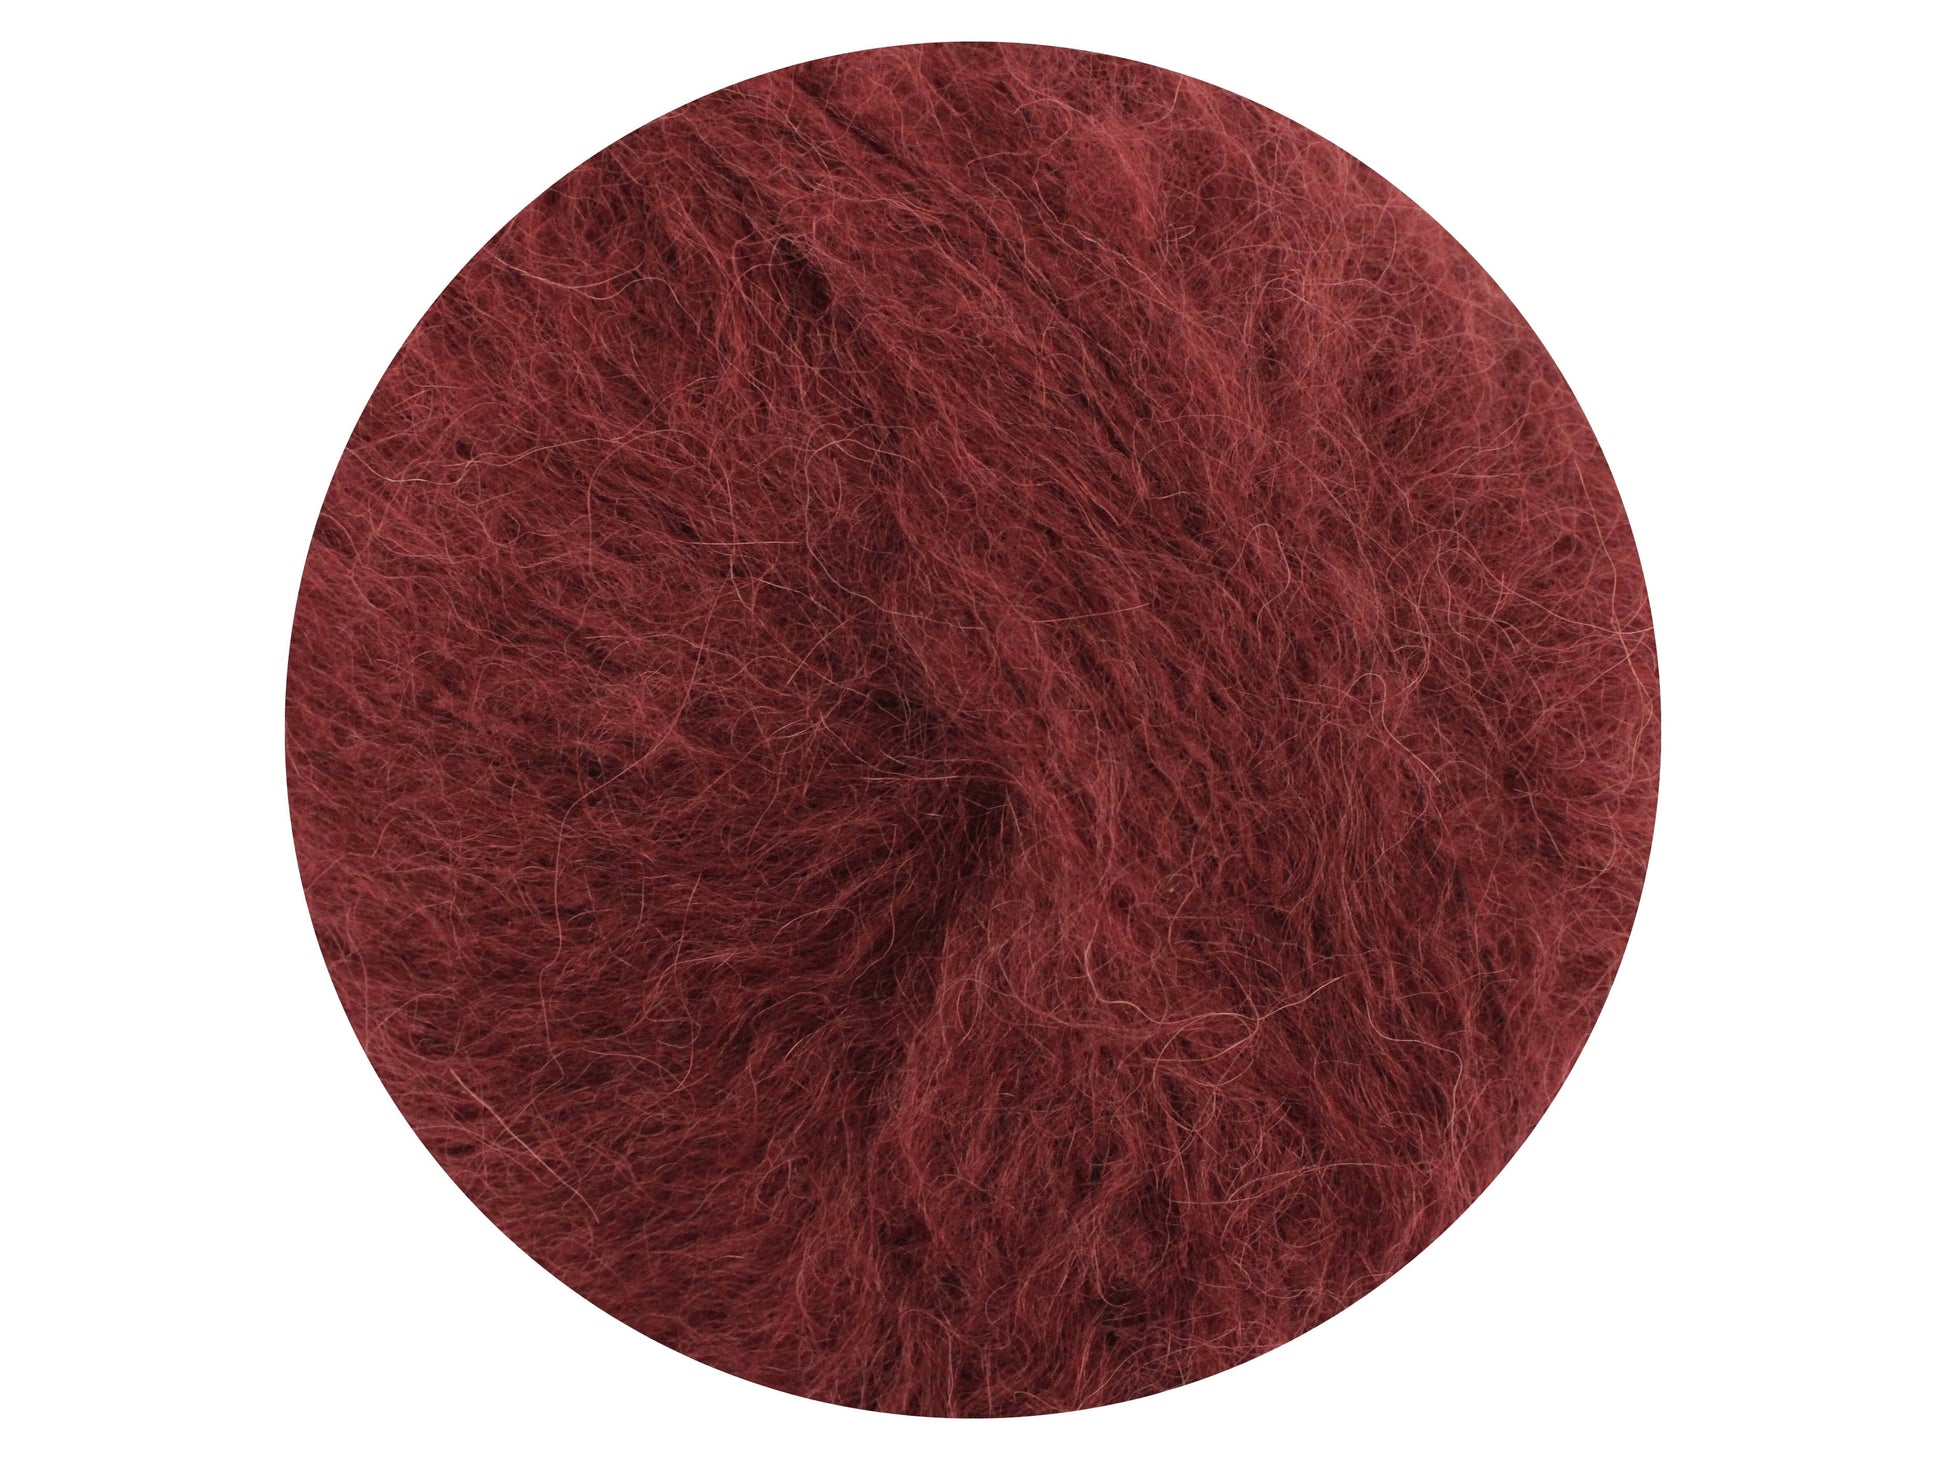 Fuzzy Yarn - 25g - The Makerss